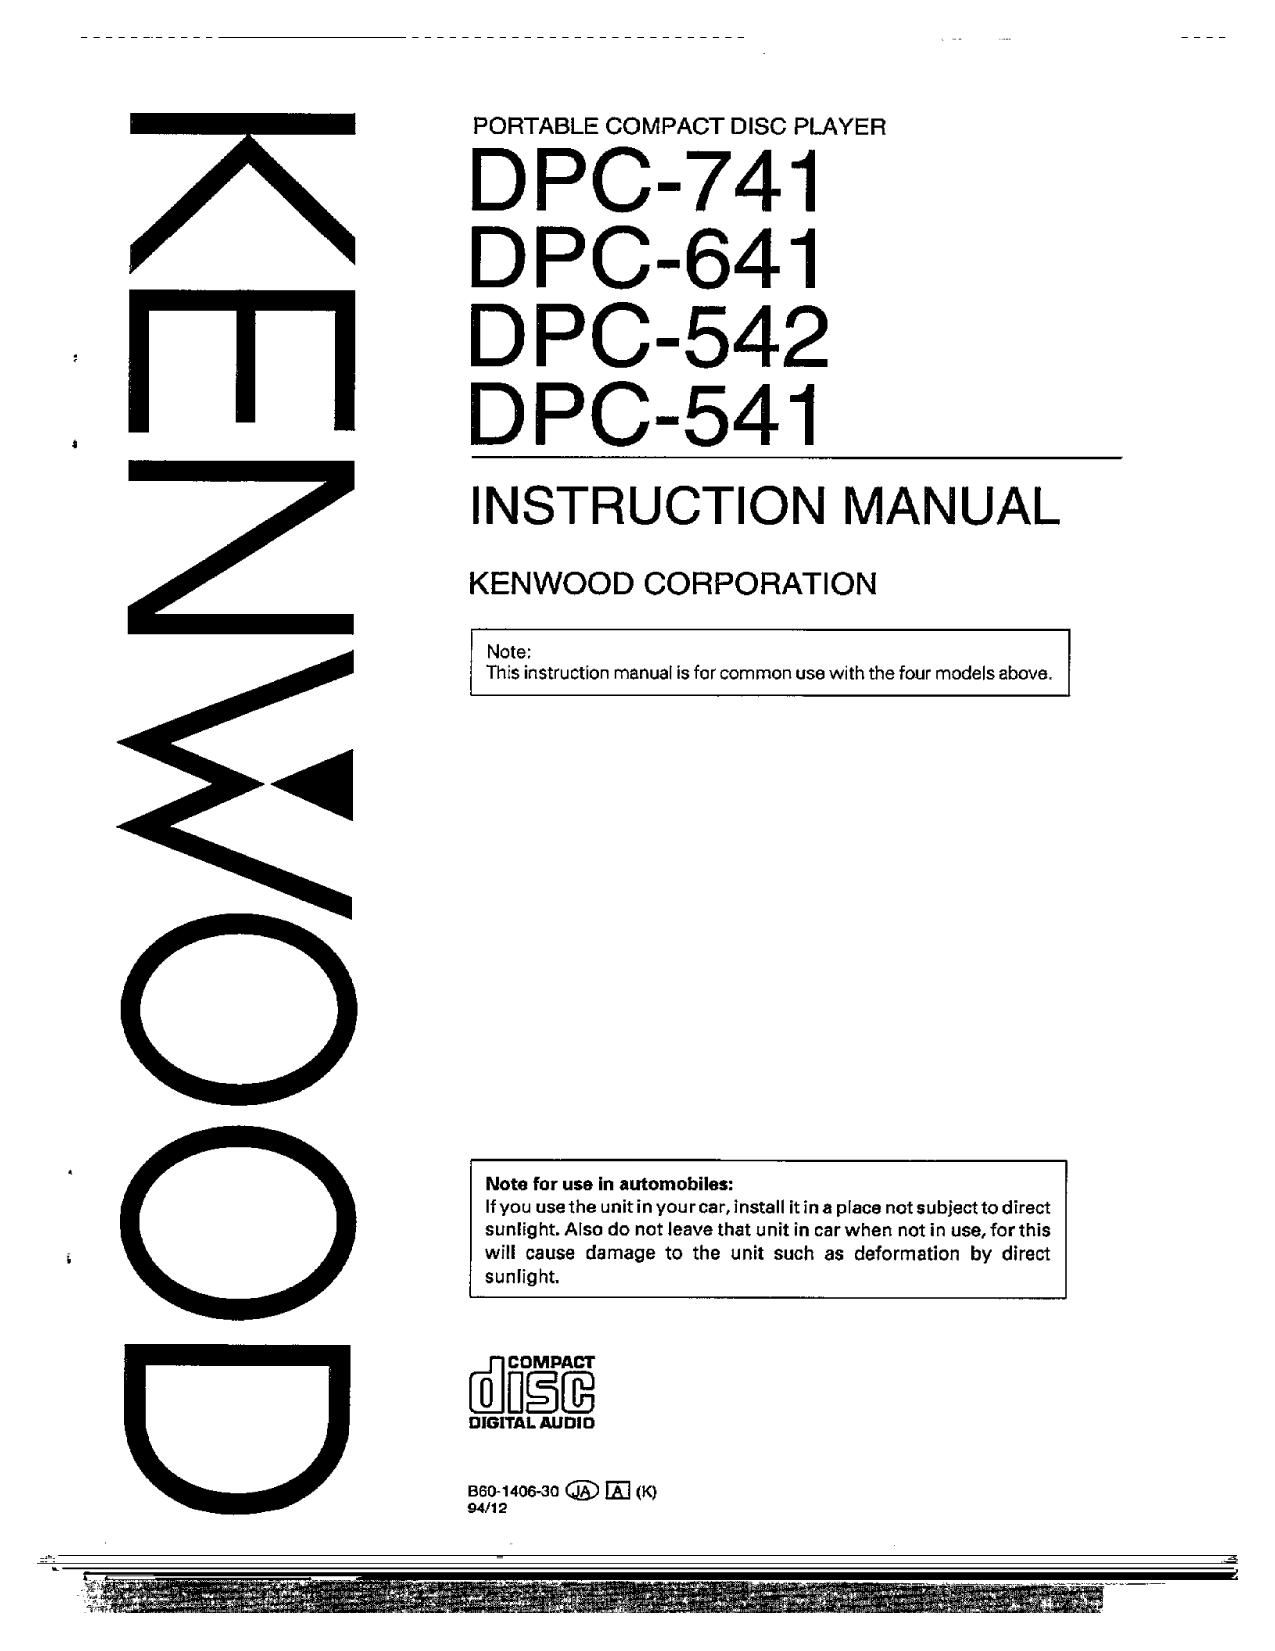 Kenwood DPC 741 Owners Manual